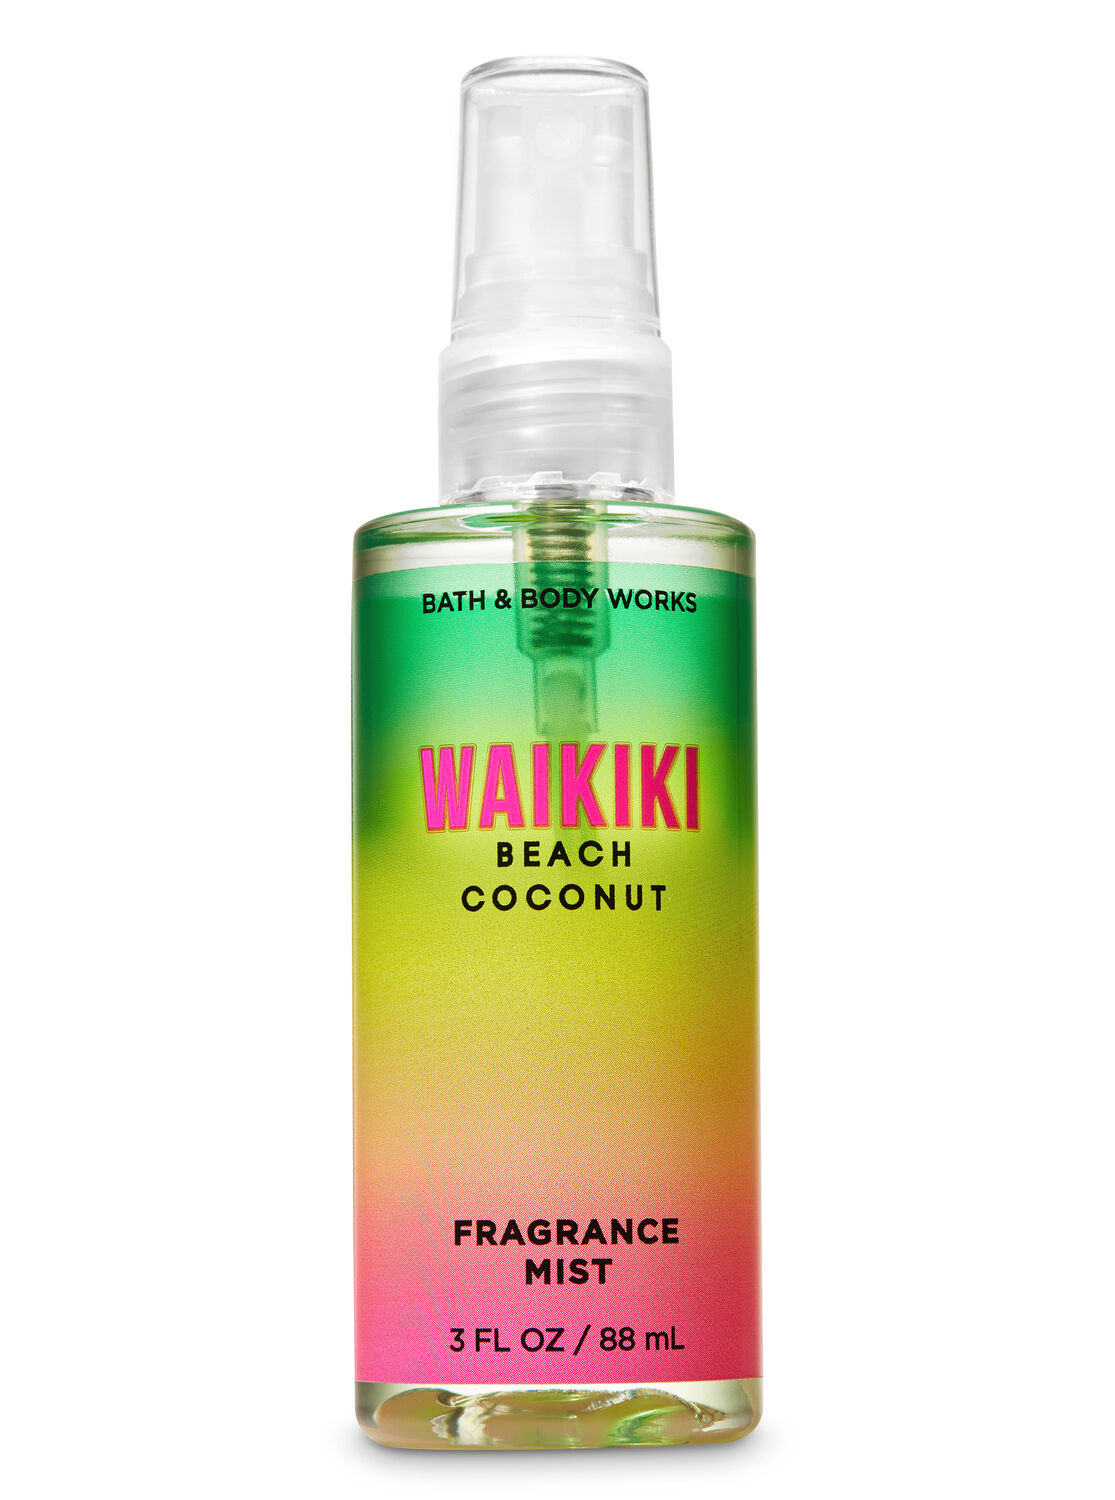 Waikiki Beach Coconut Travel Size Fine Fragrance Mist Bath